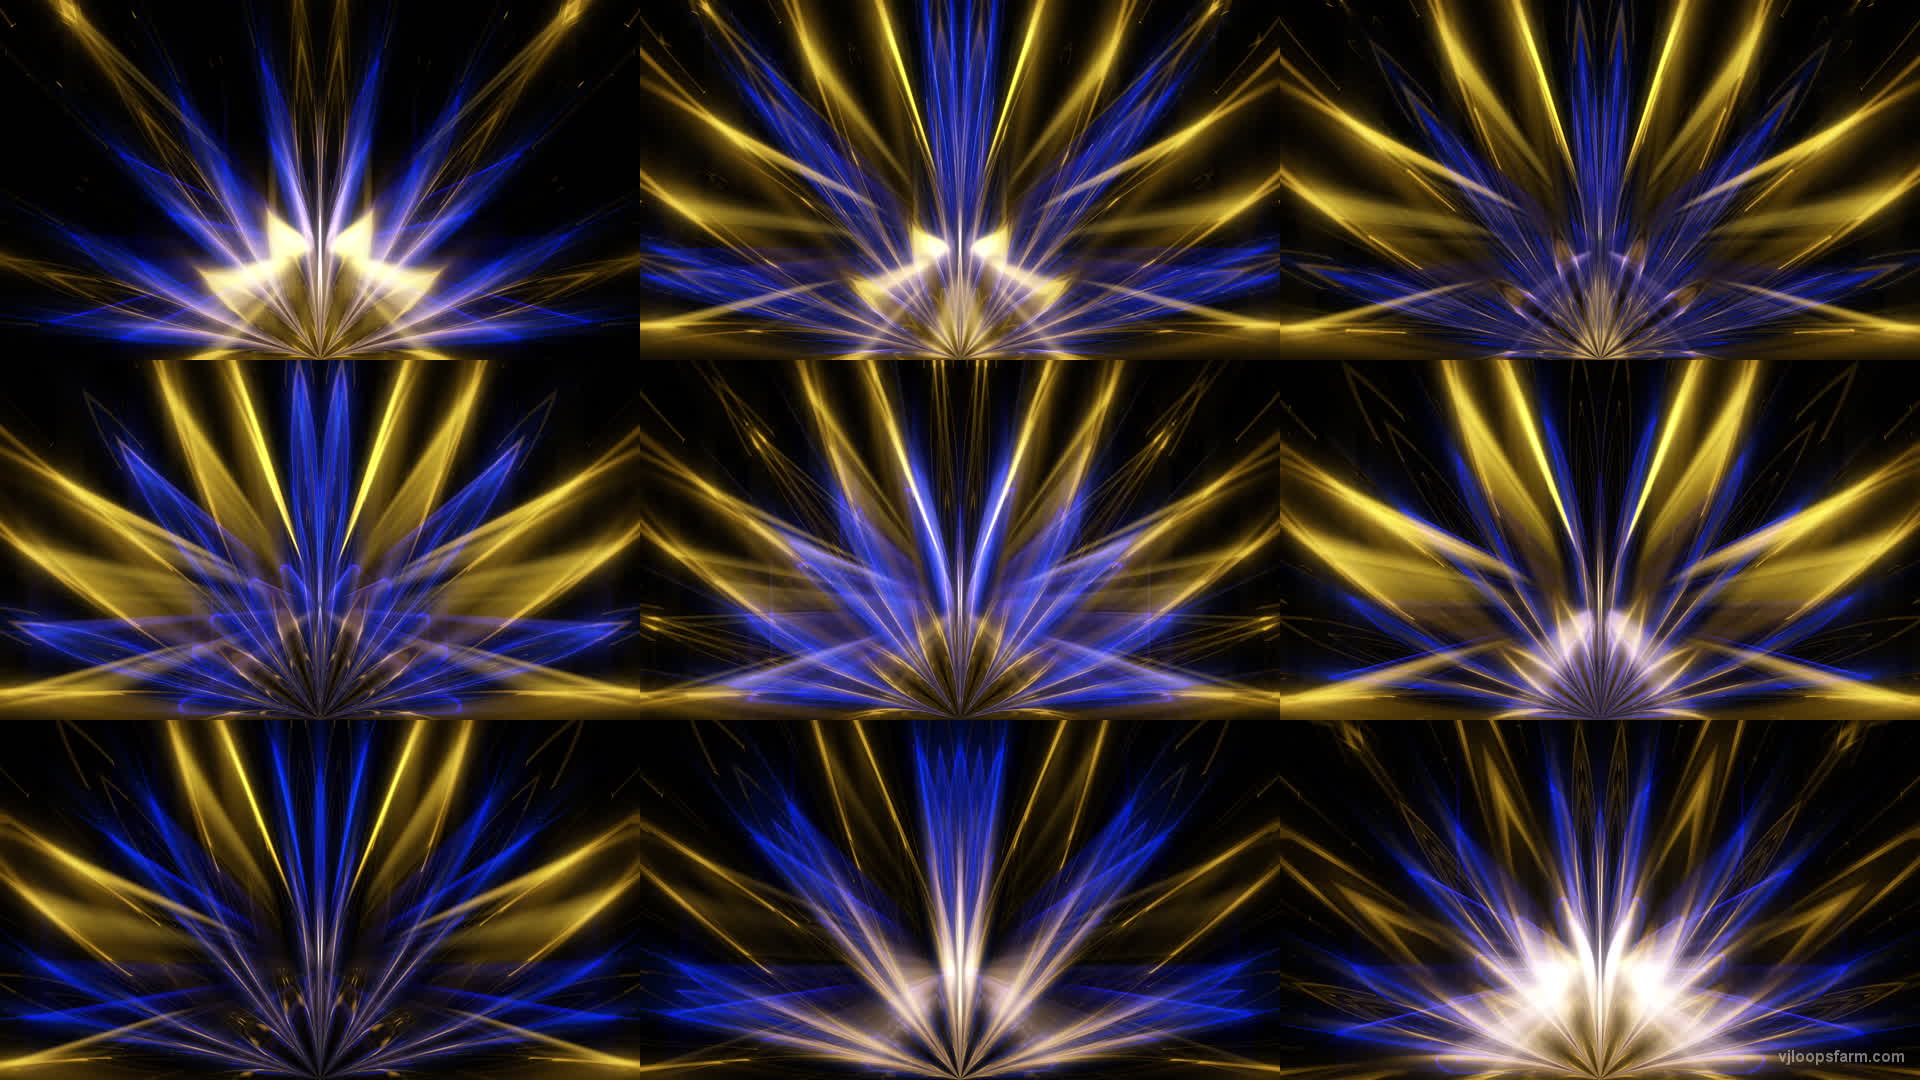 Abstract Sun Flower Flow in Blue-Golden Light Video Art UHD VJ Loop